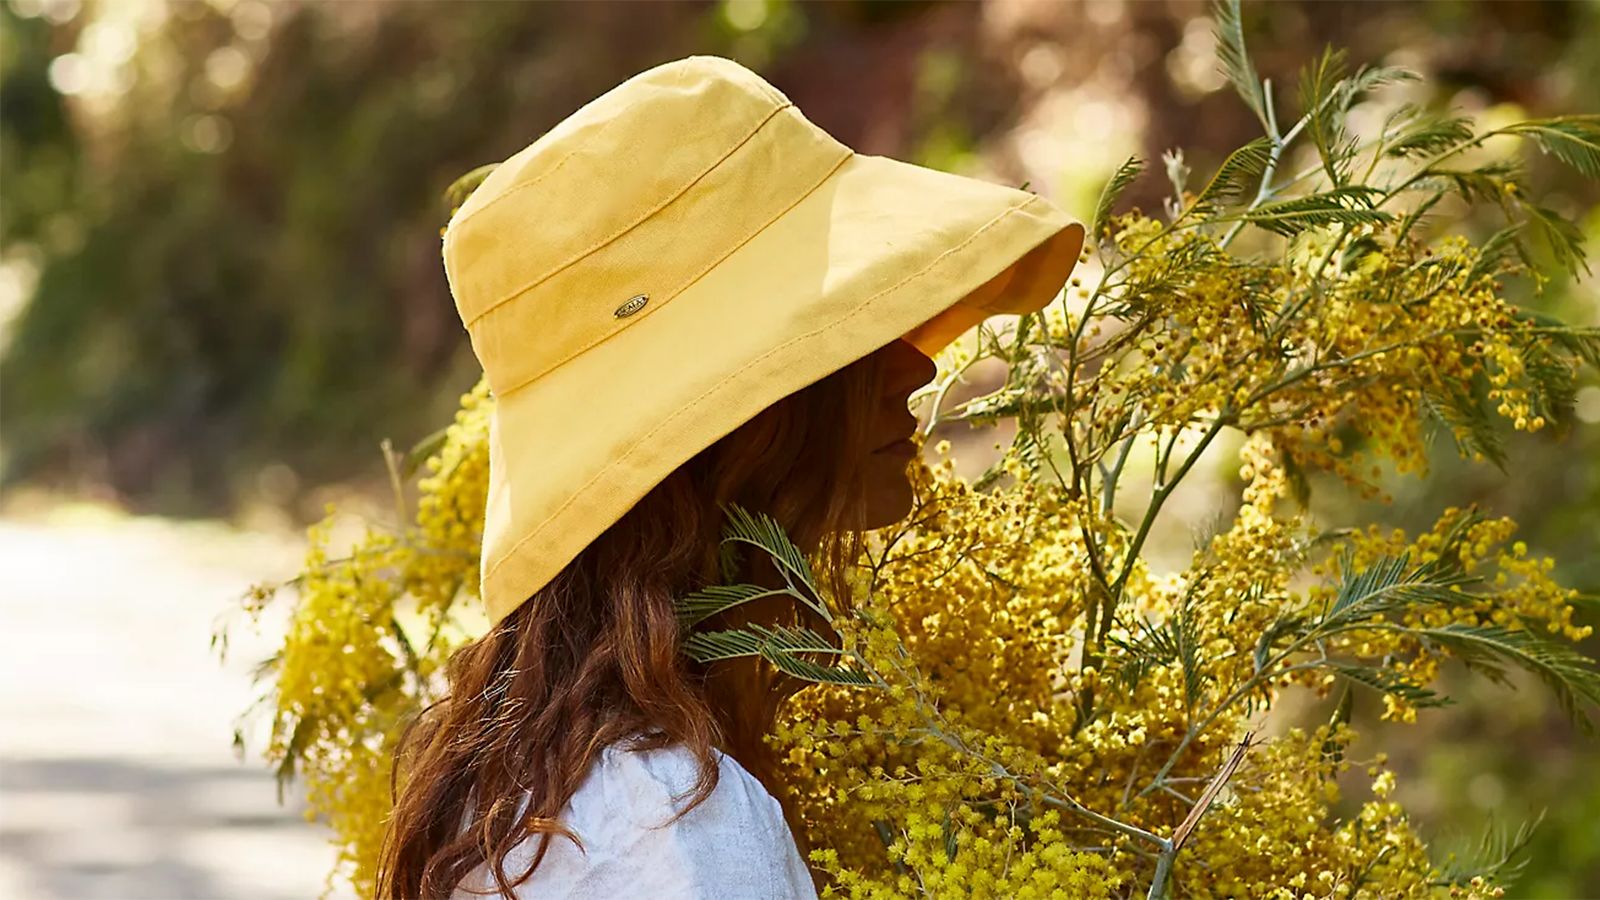 Wave Bucket - Cotton Bucket Hat in Yellow